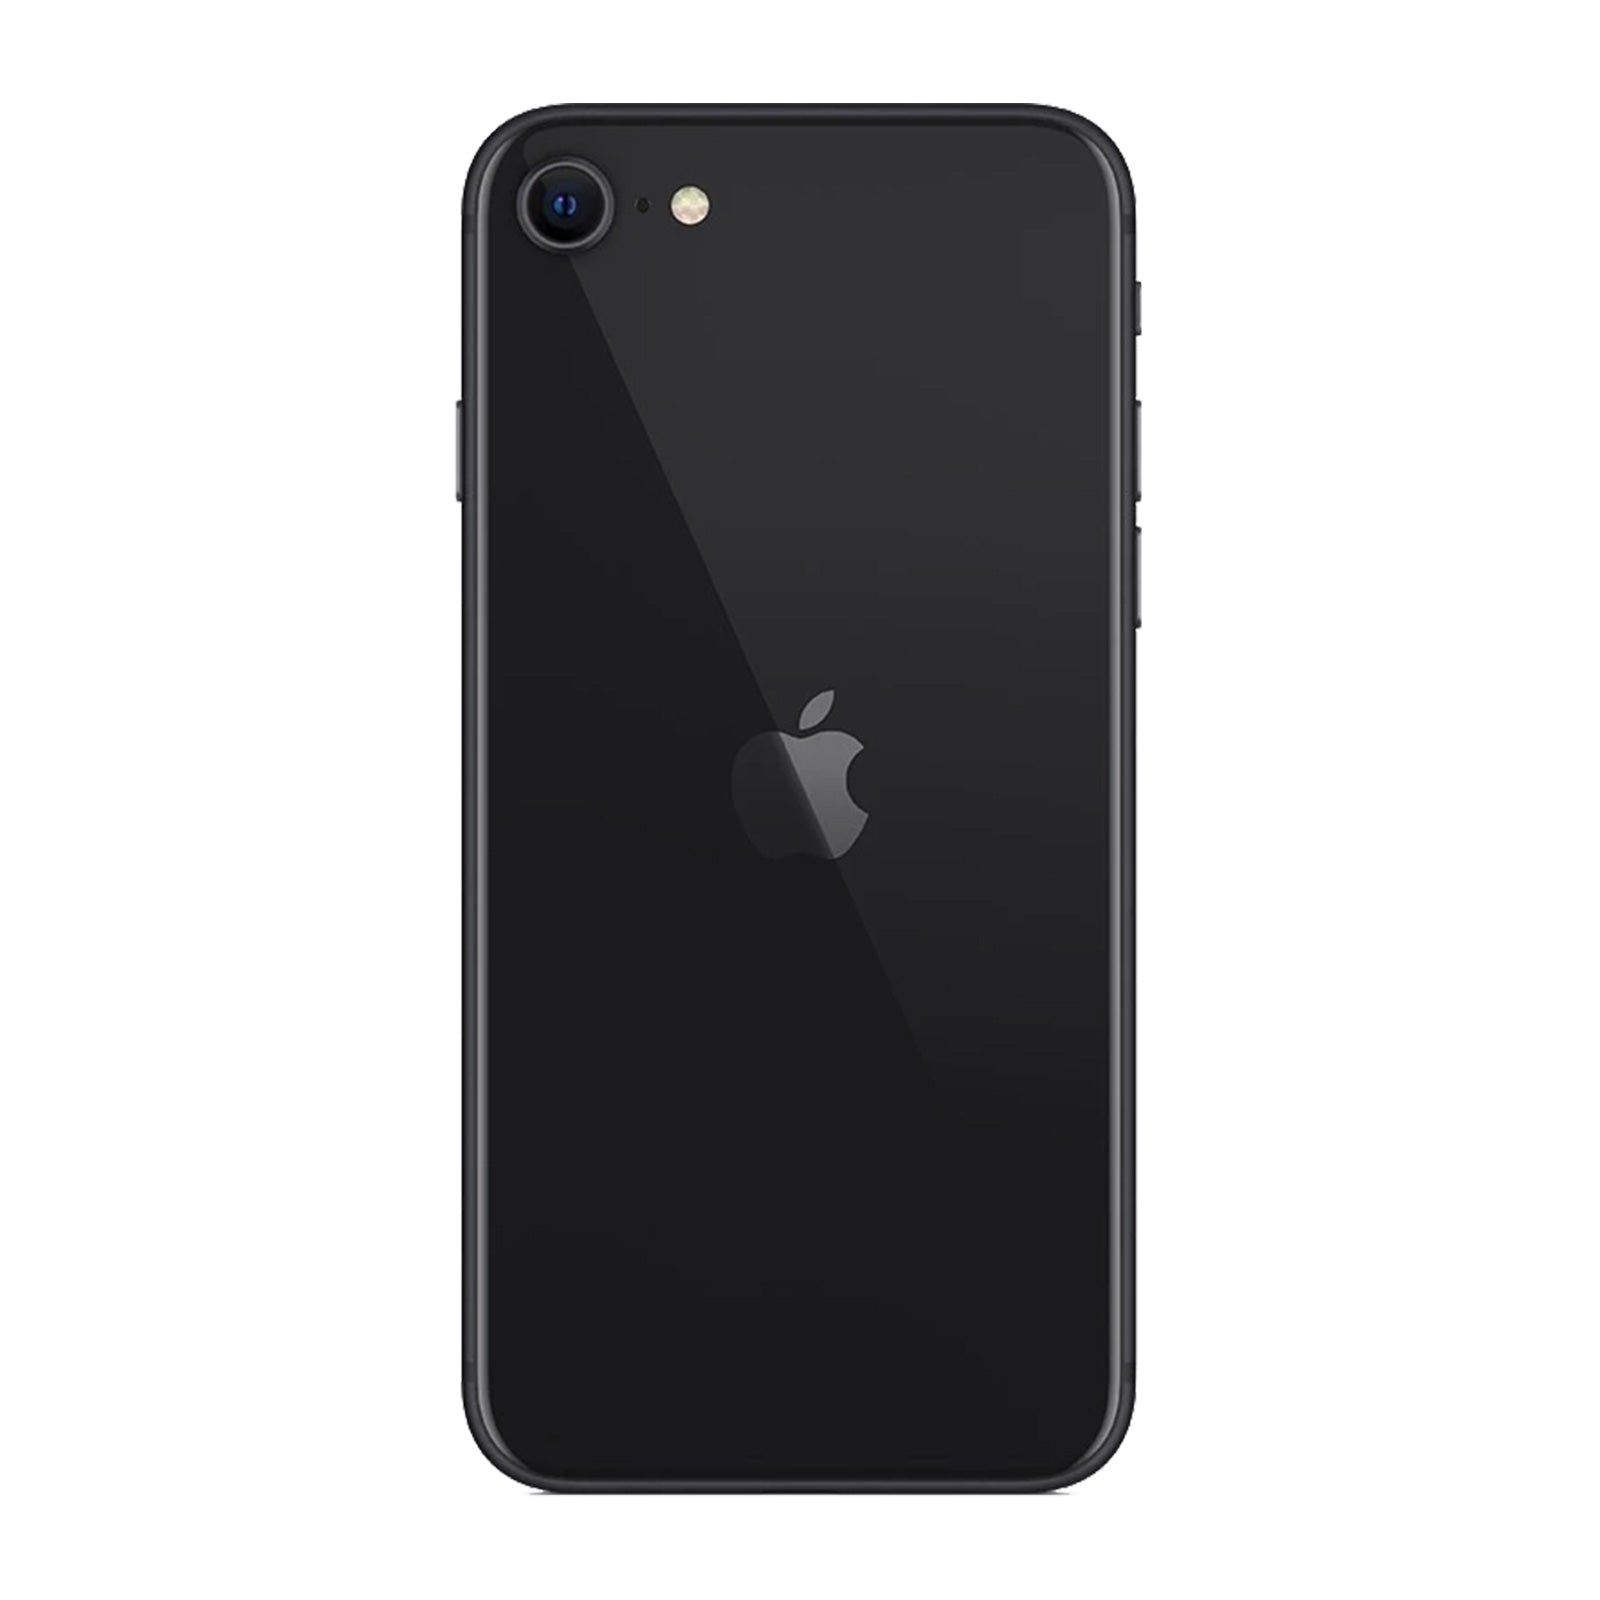 Apple iPhone SE 2nd Gen 128GB Black Fair Sprint